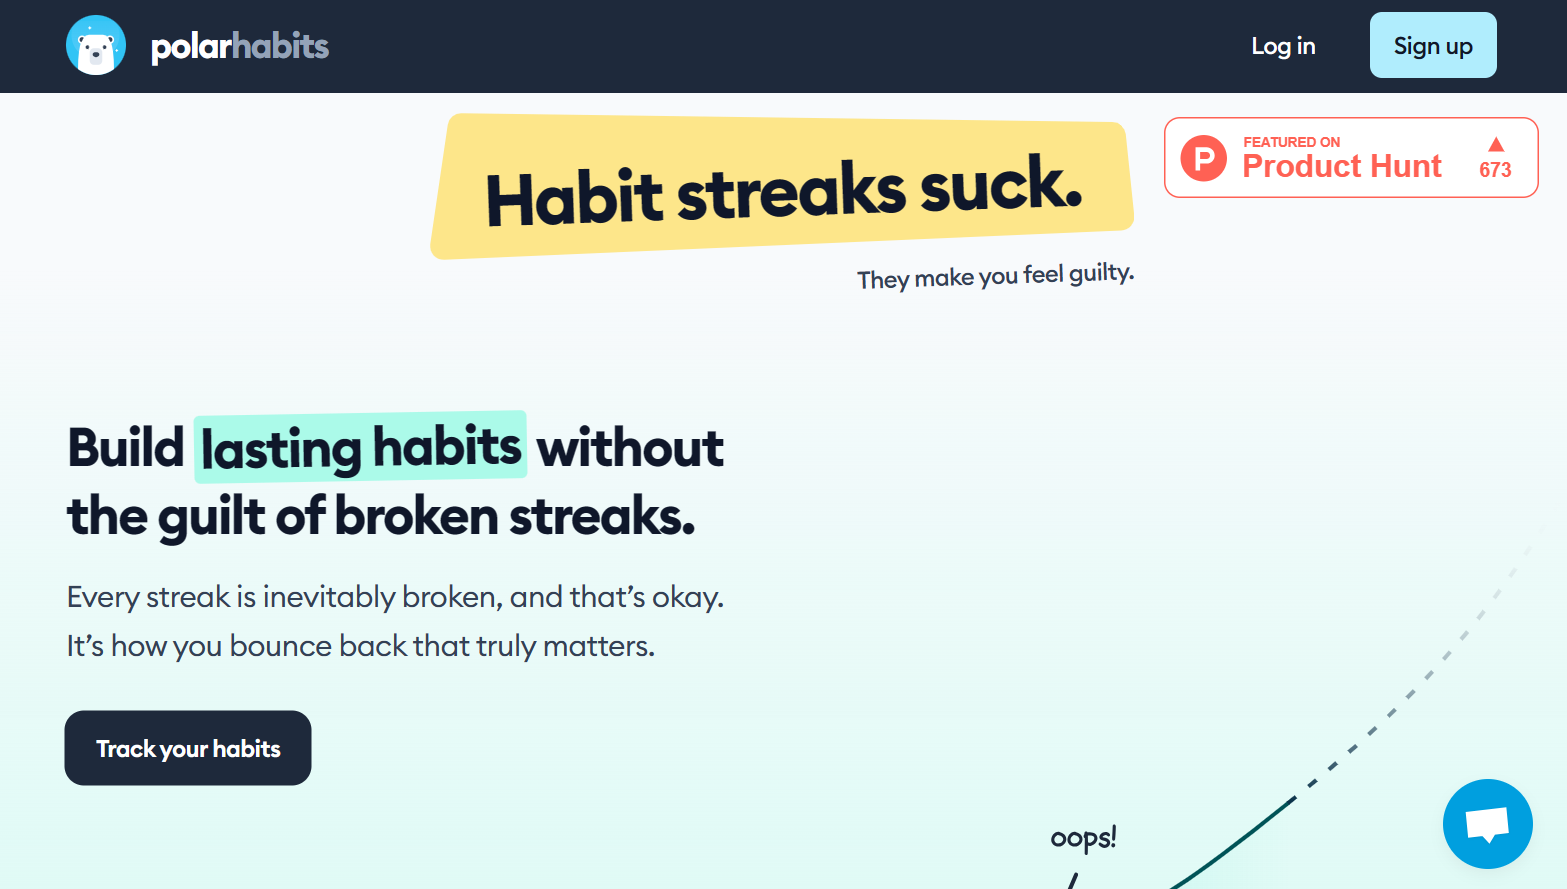 polarhabits.com – Get habited to streaks